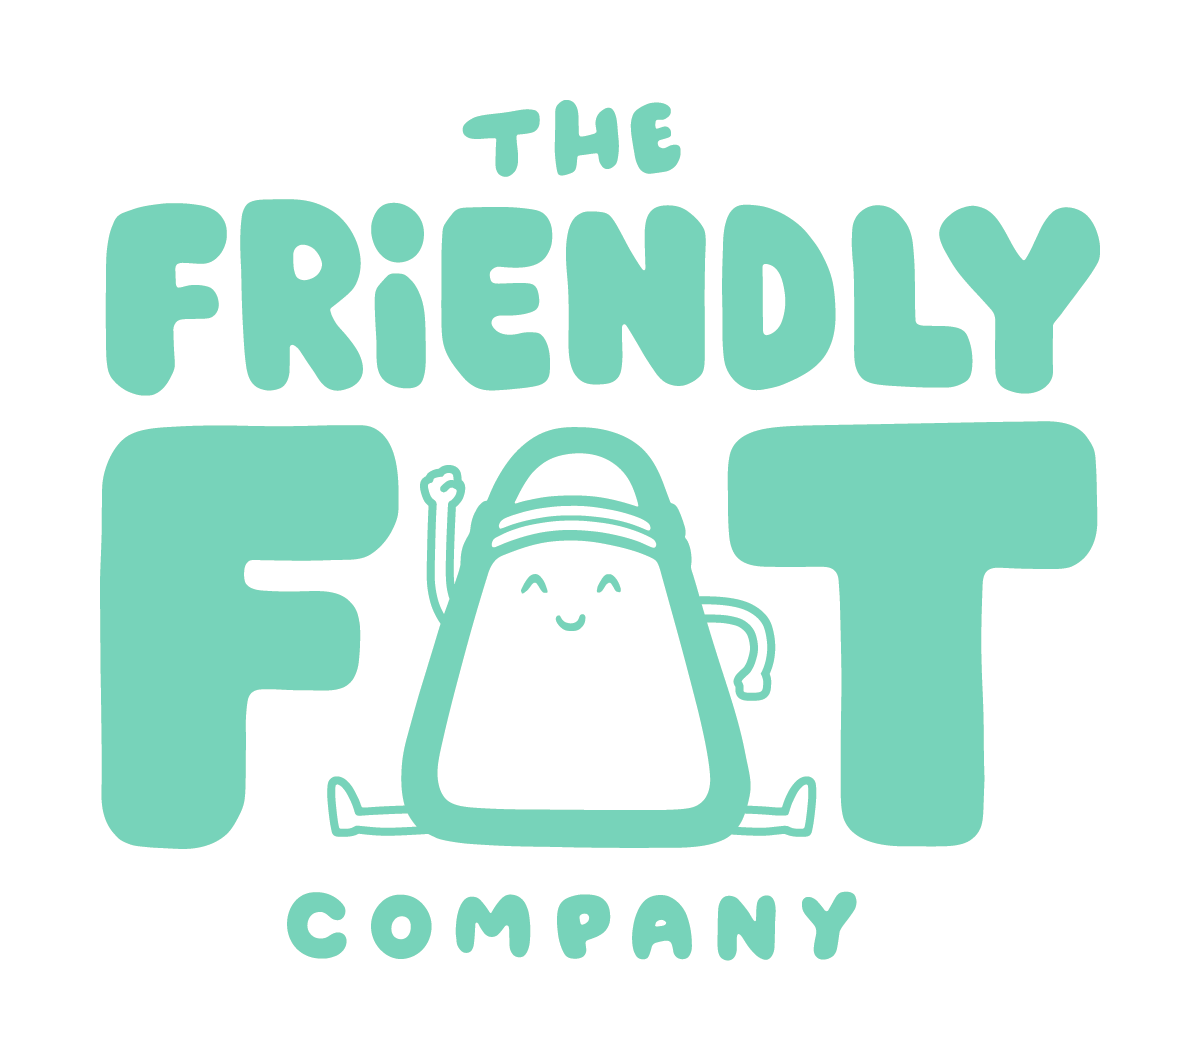 The Friendly Fat Company